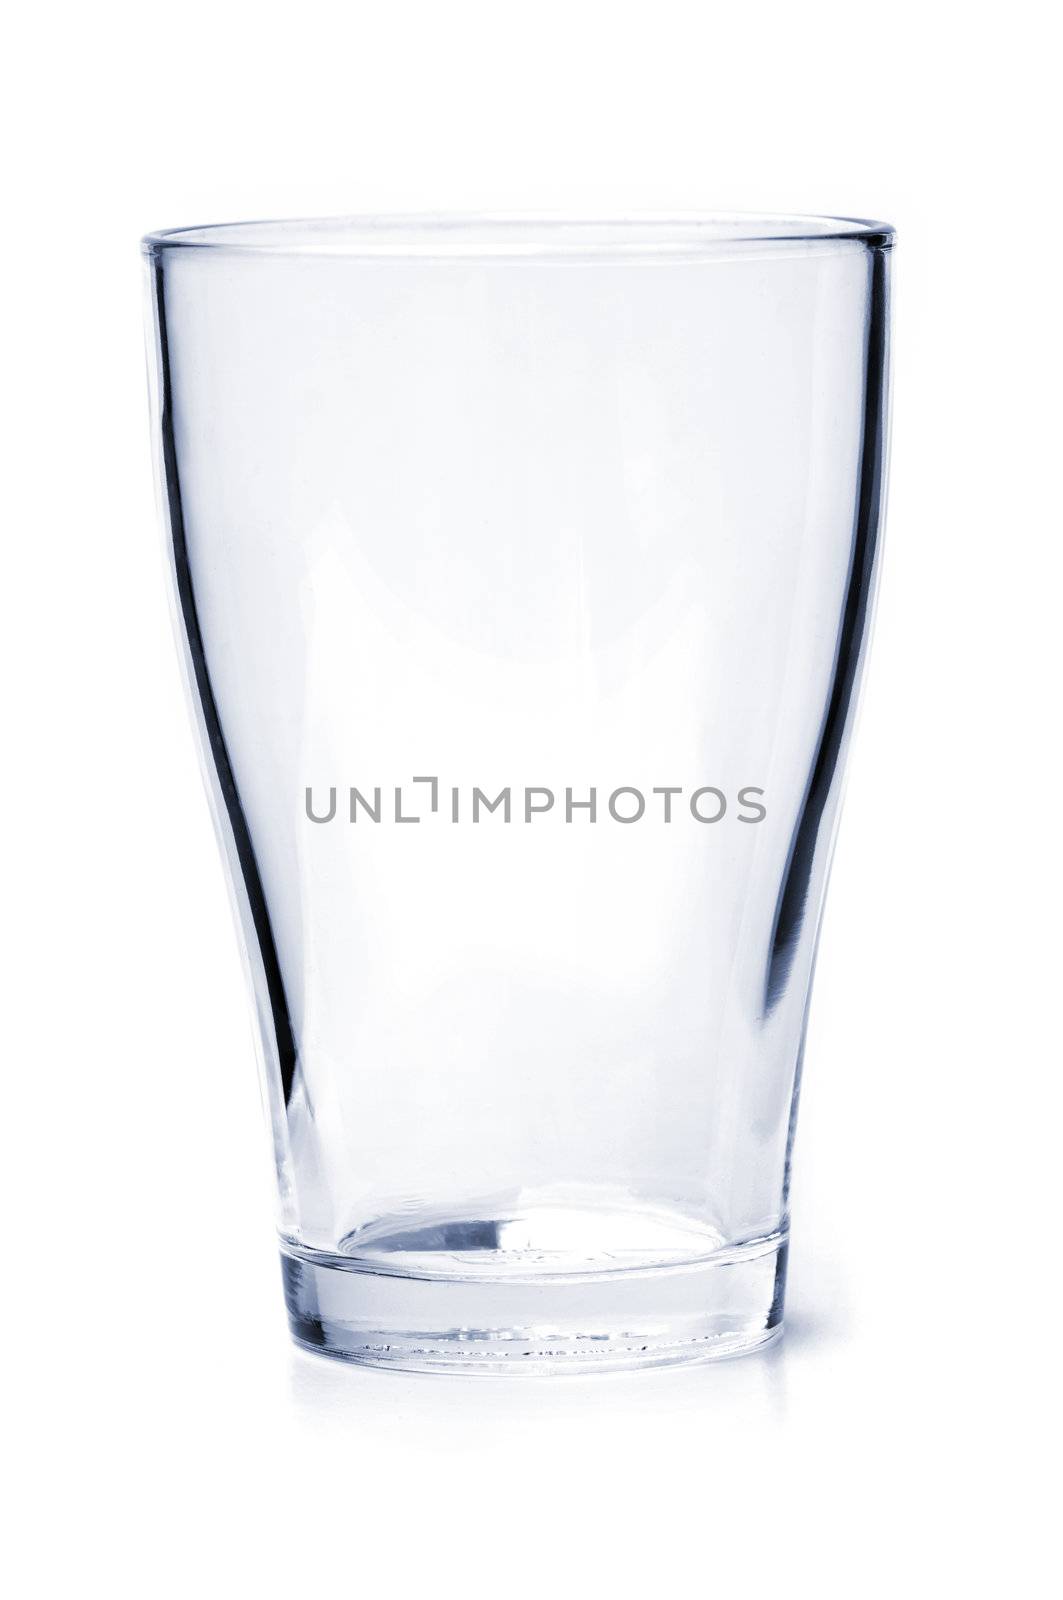 Empty drinking glass by elenathewise